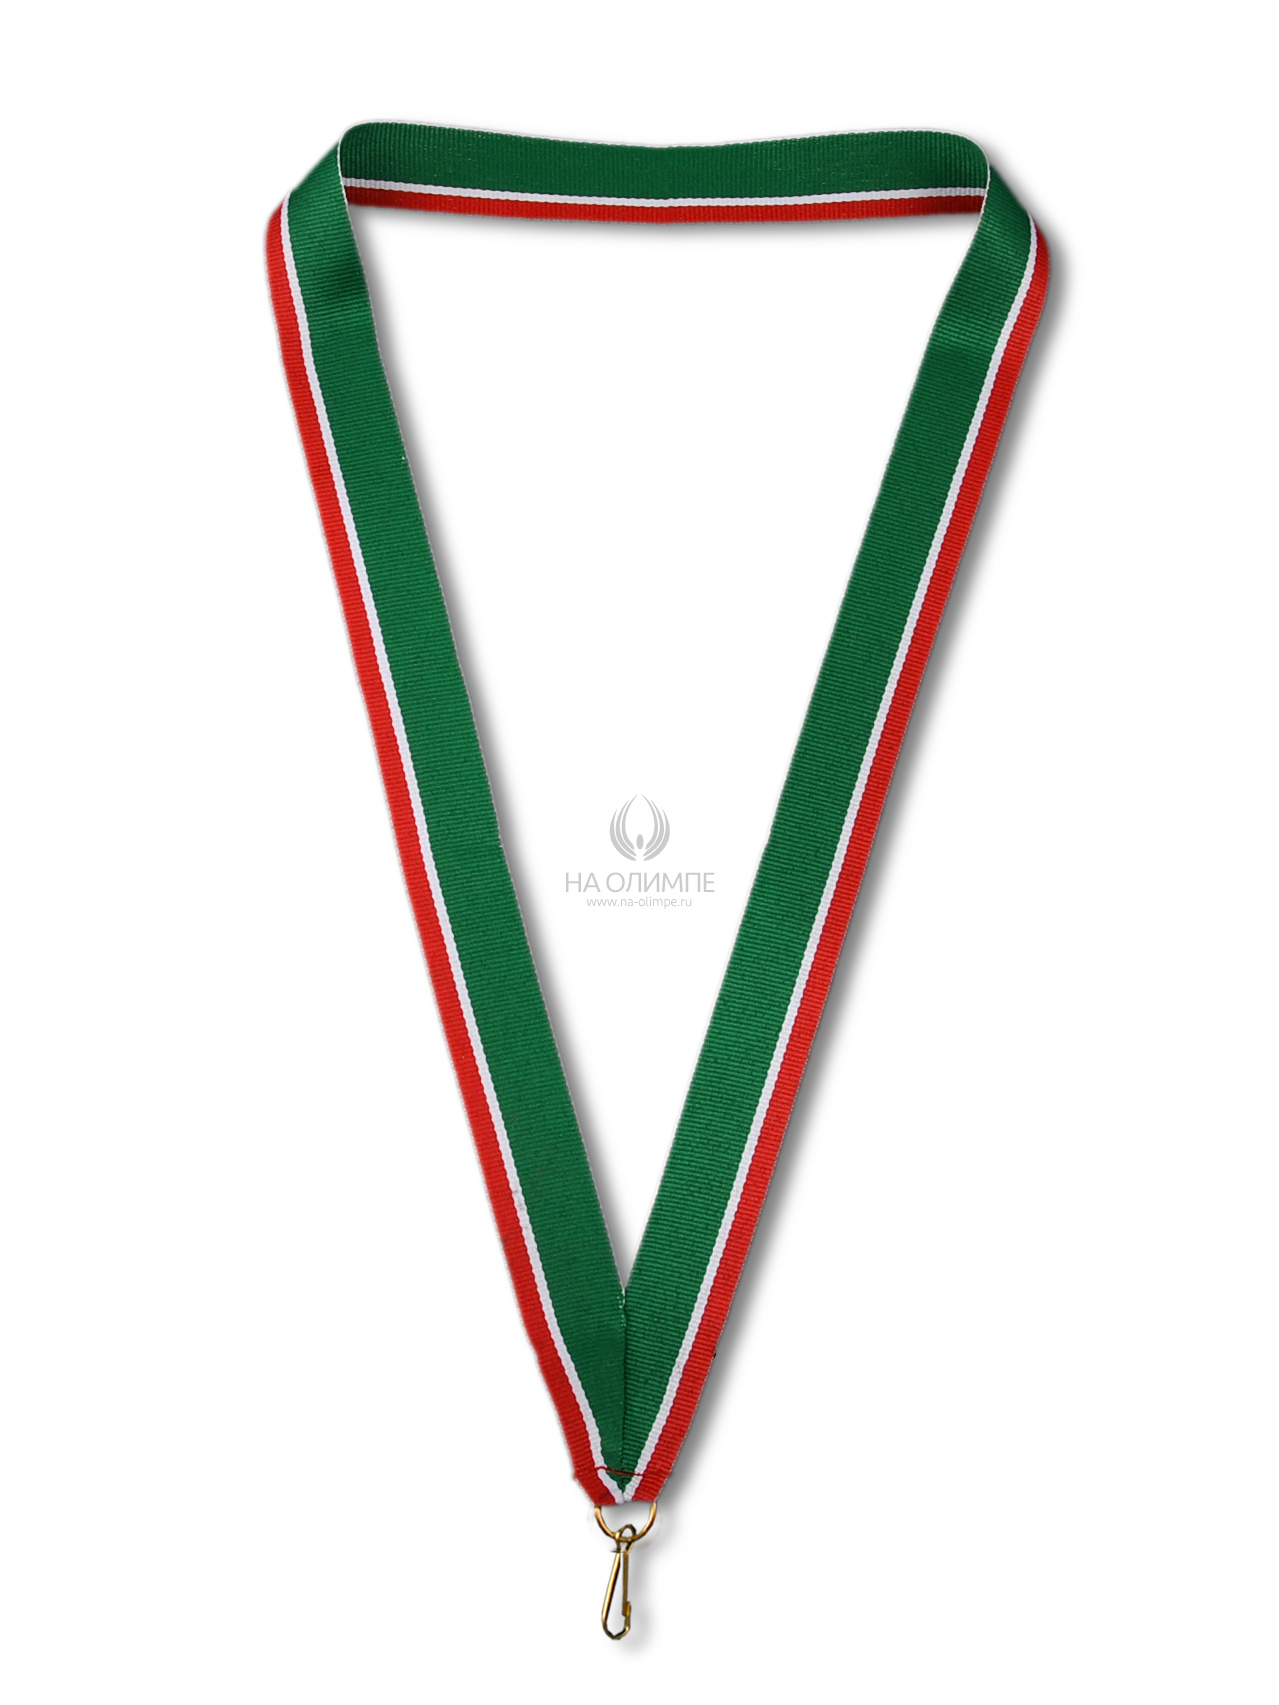 Лента для медали (Чечня), ширина ленты 22 мм